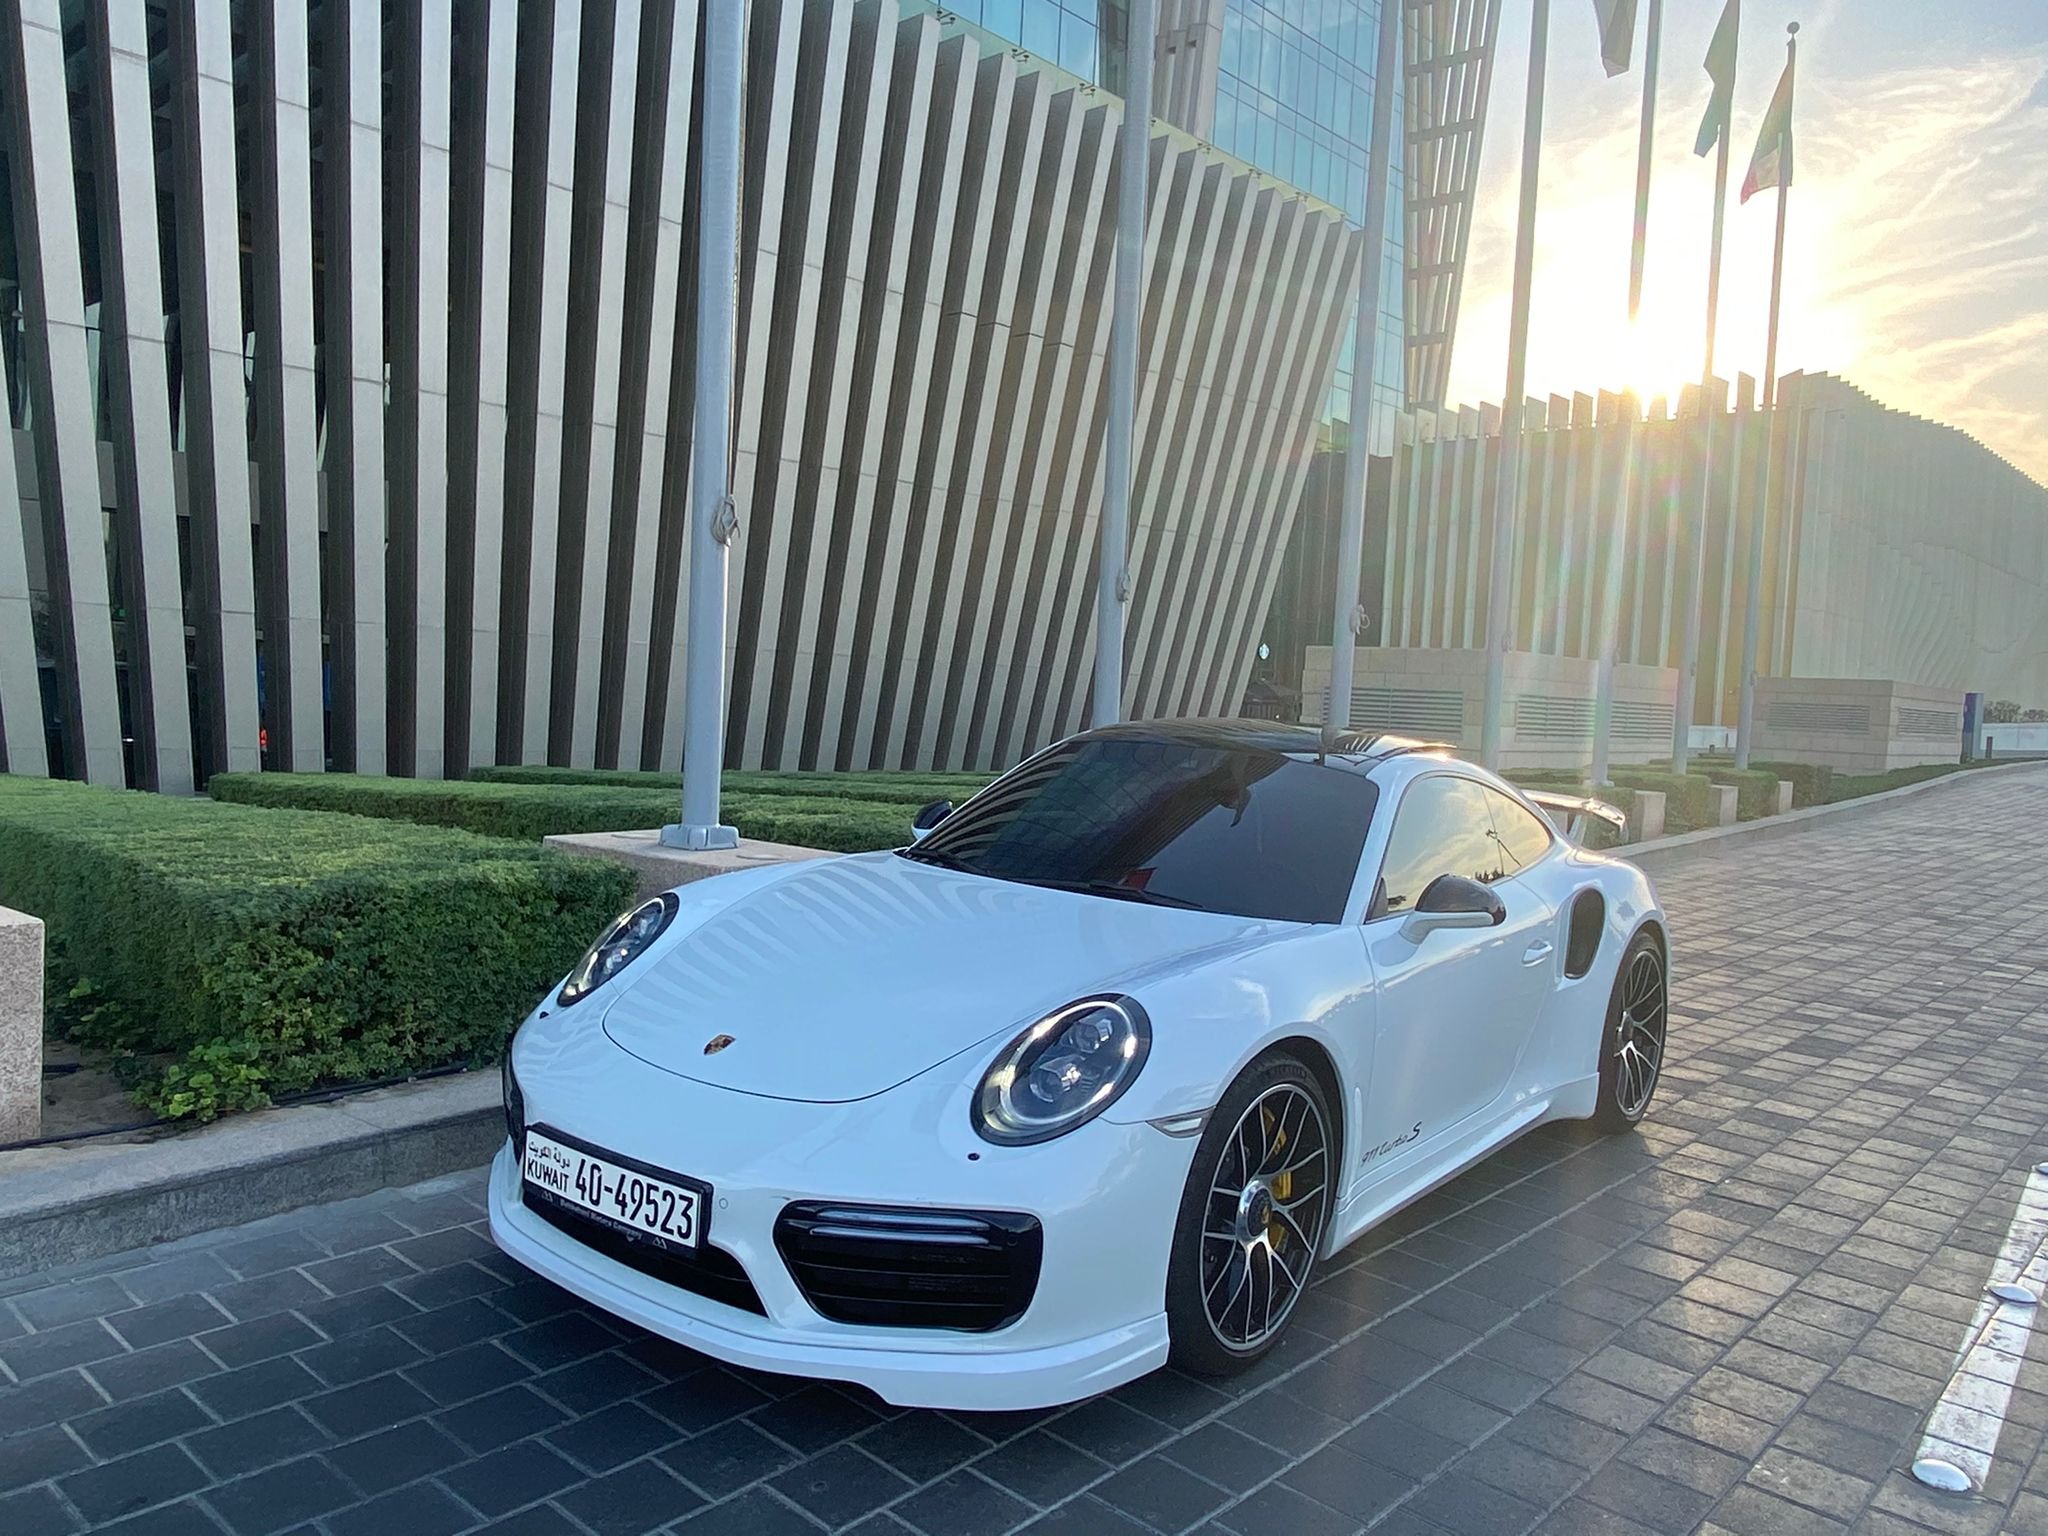 Porsche 911 turbo s 2017 بورشه ٩١١ تيربو اس ٢٠١٧.jpeg